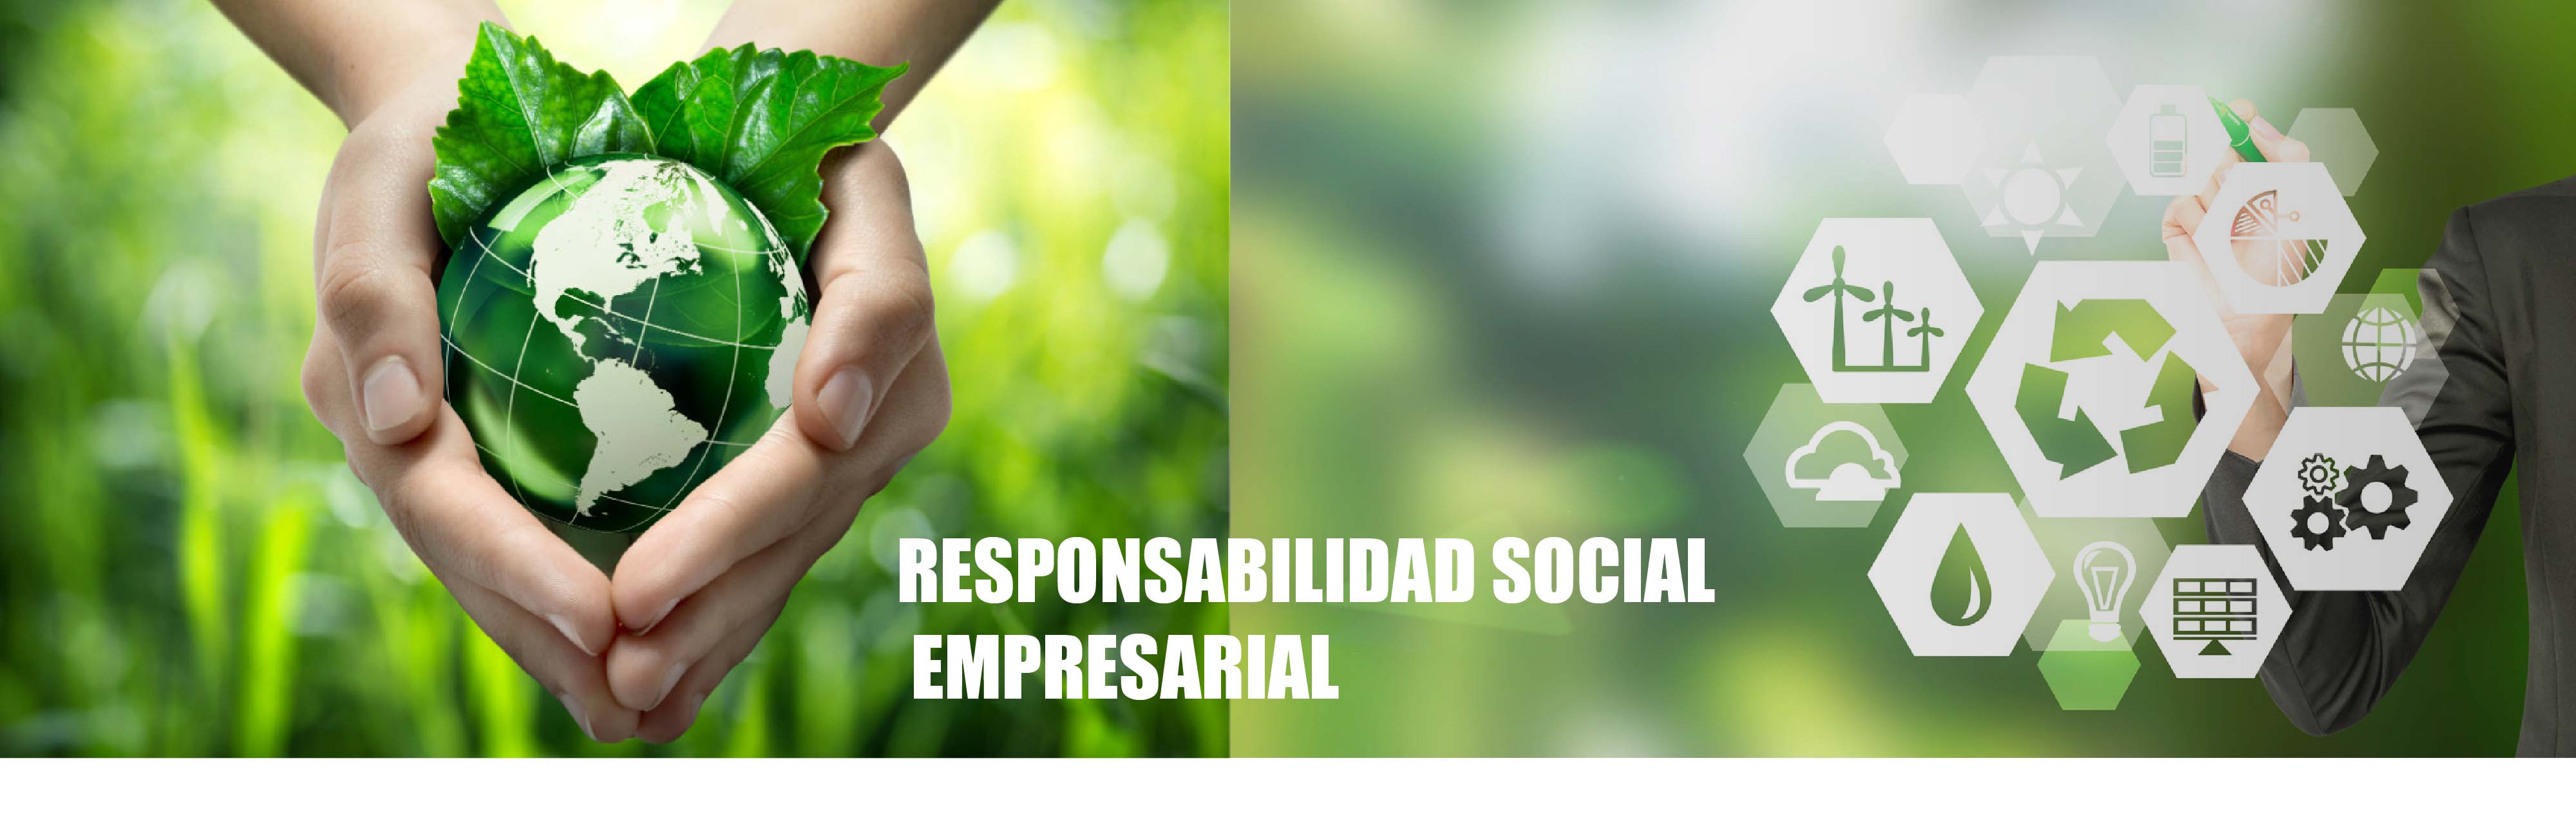 Banner Responsabilidad Social Empresarial